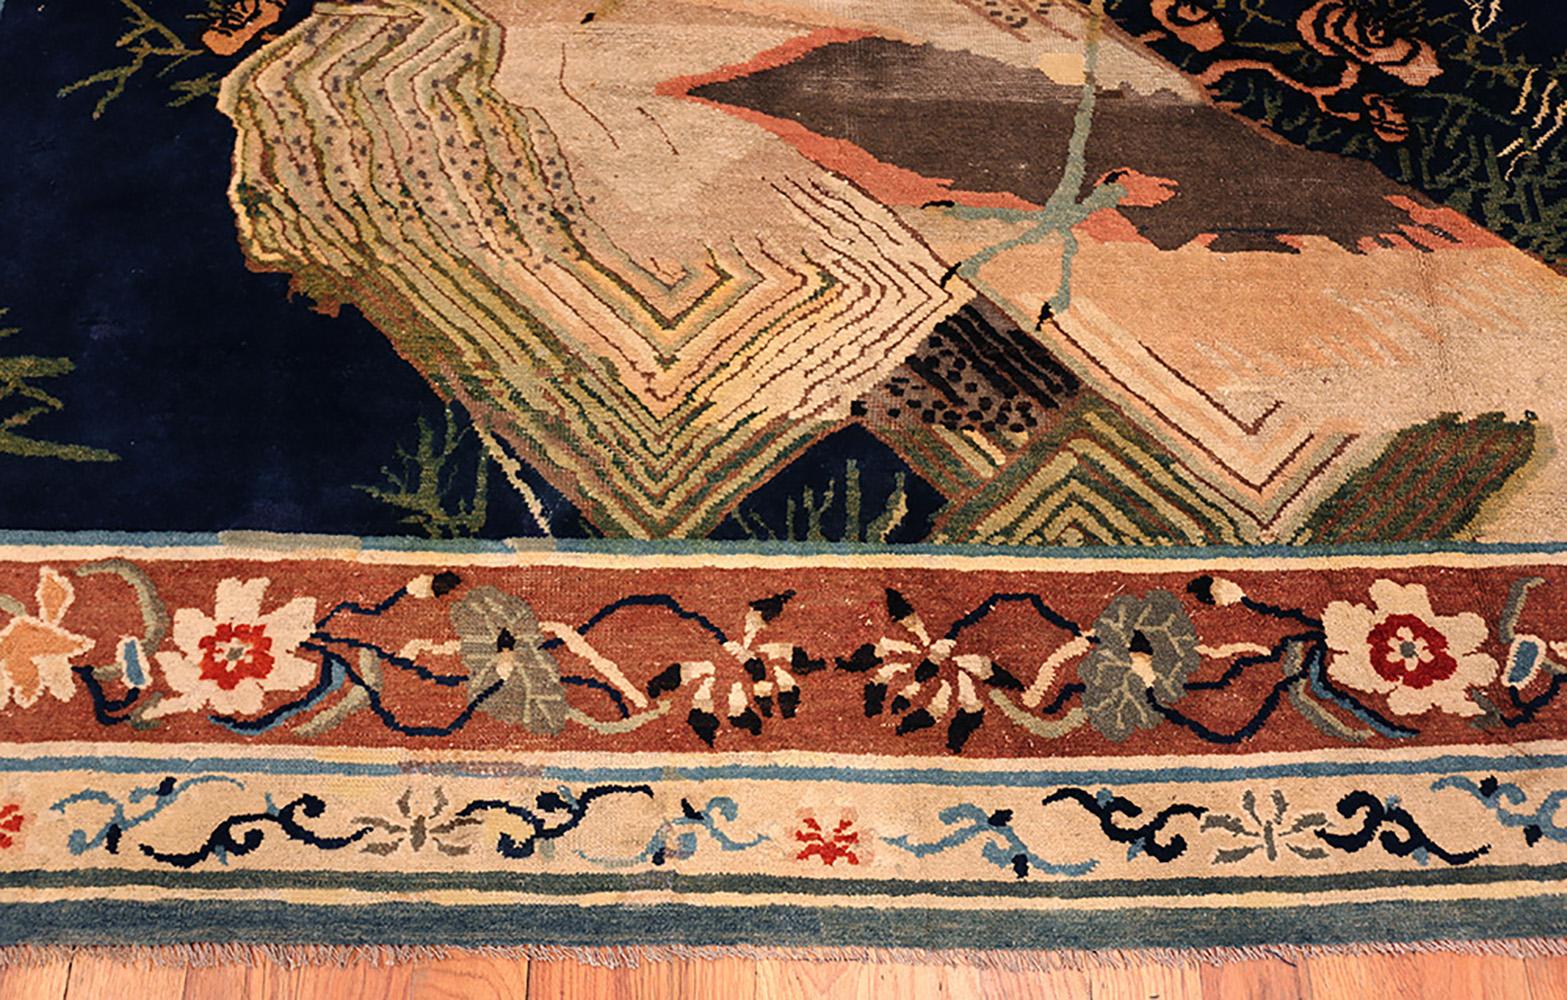 Antique 19th Century Crane Bird Landscape Chinese Carpet. Size: 8' x 11' 5